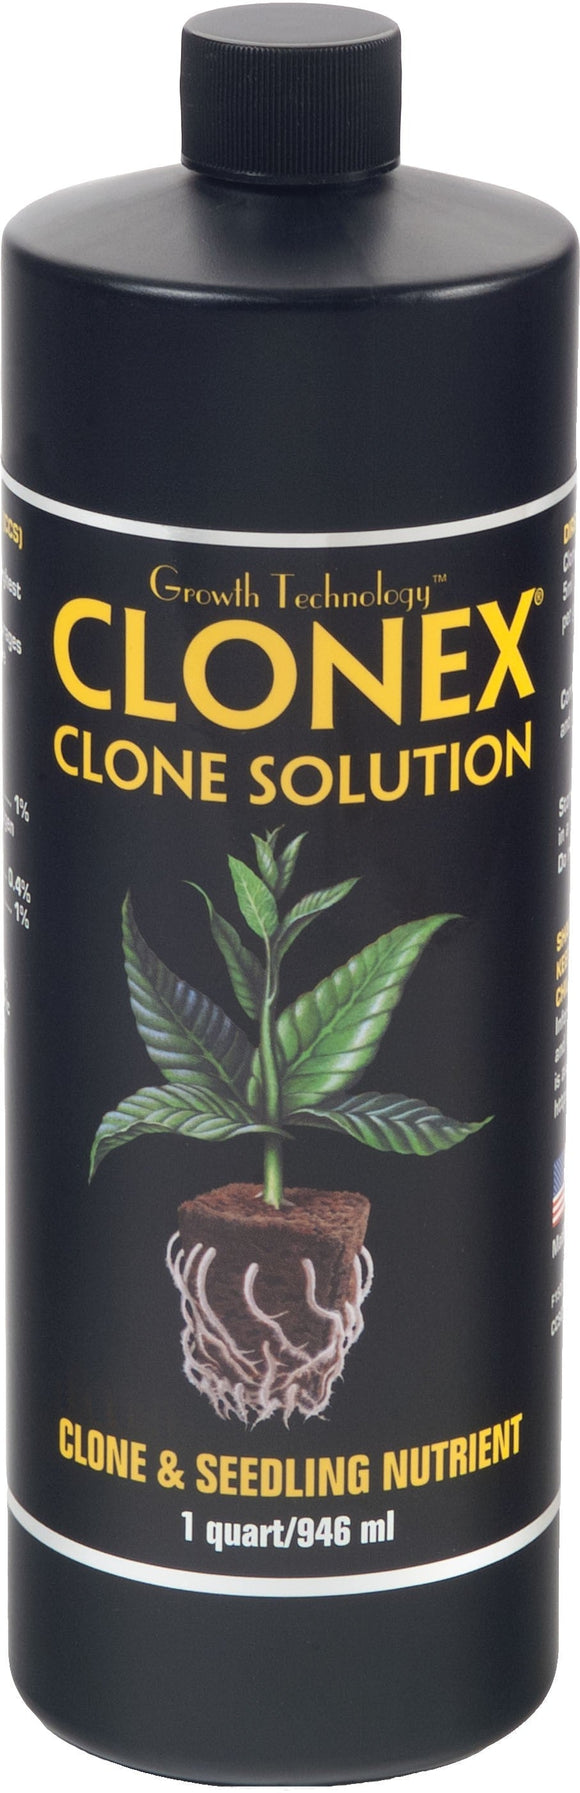 HydroDynamics Clonex - Clone Solution